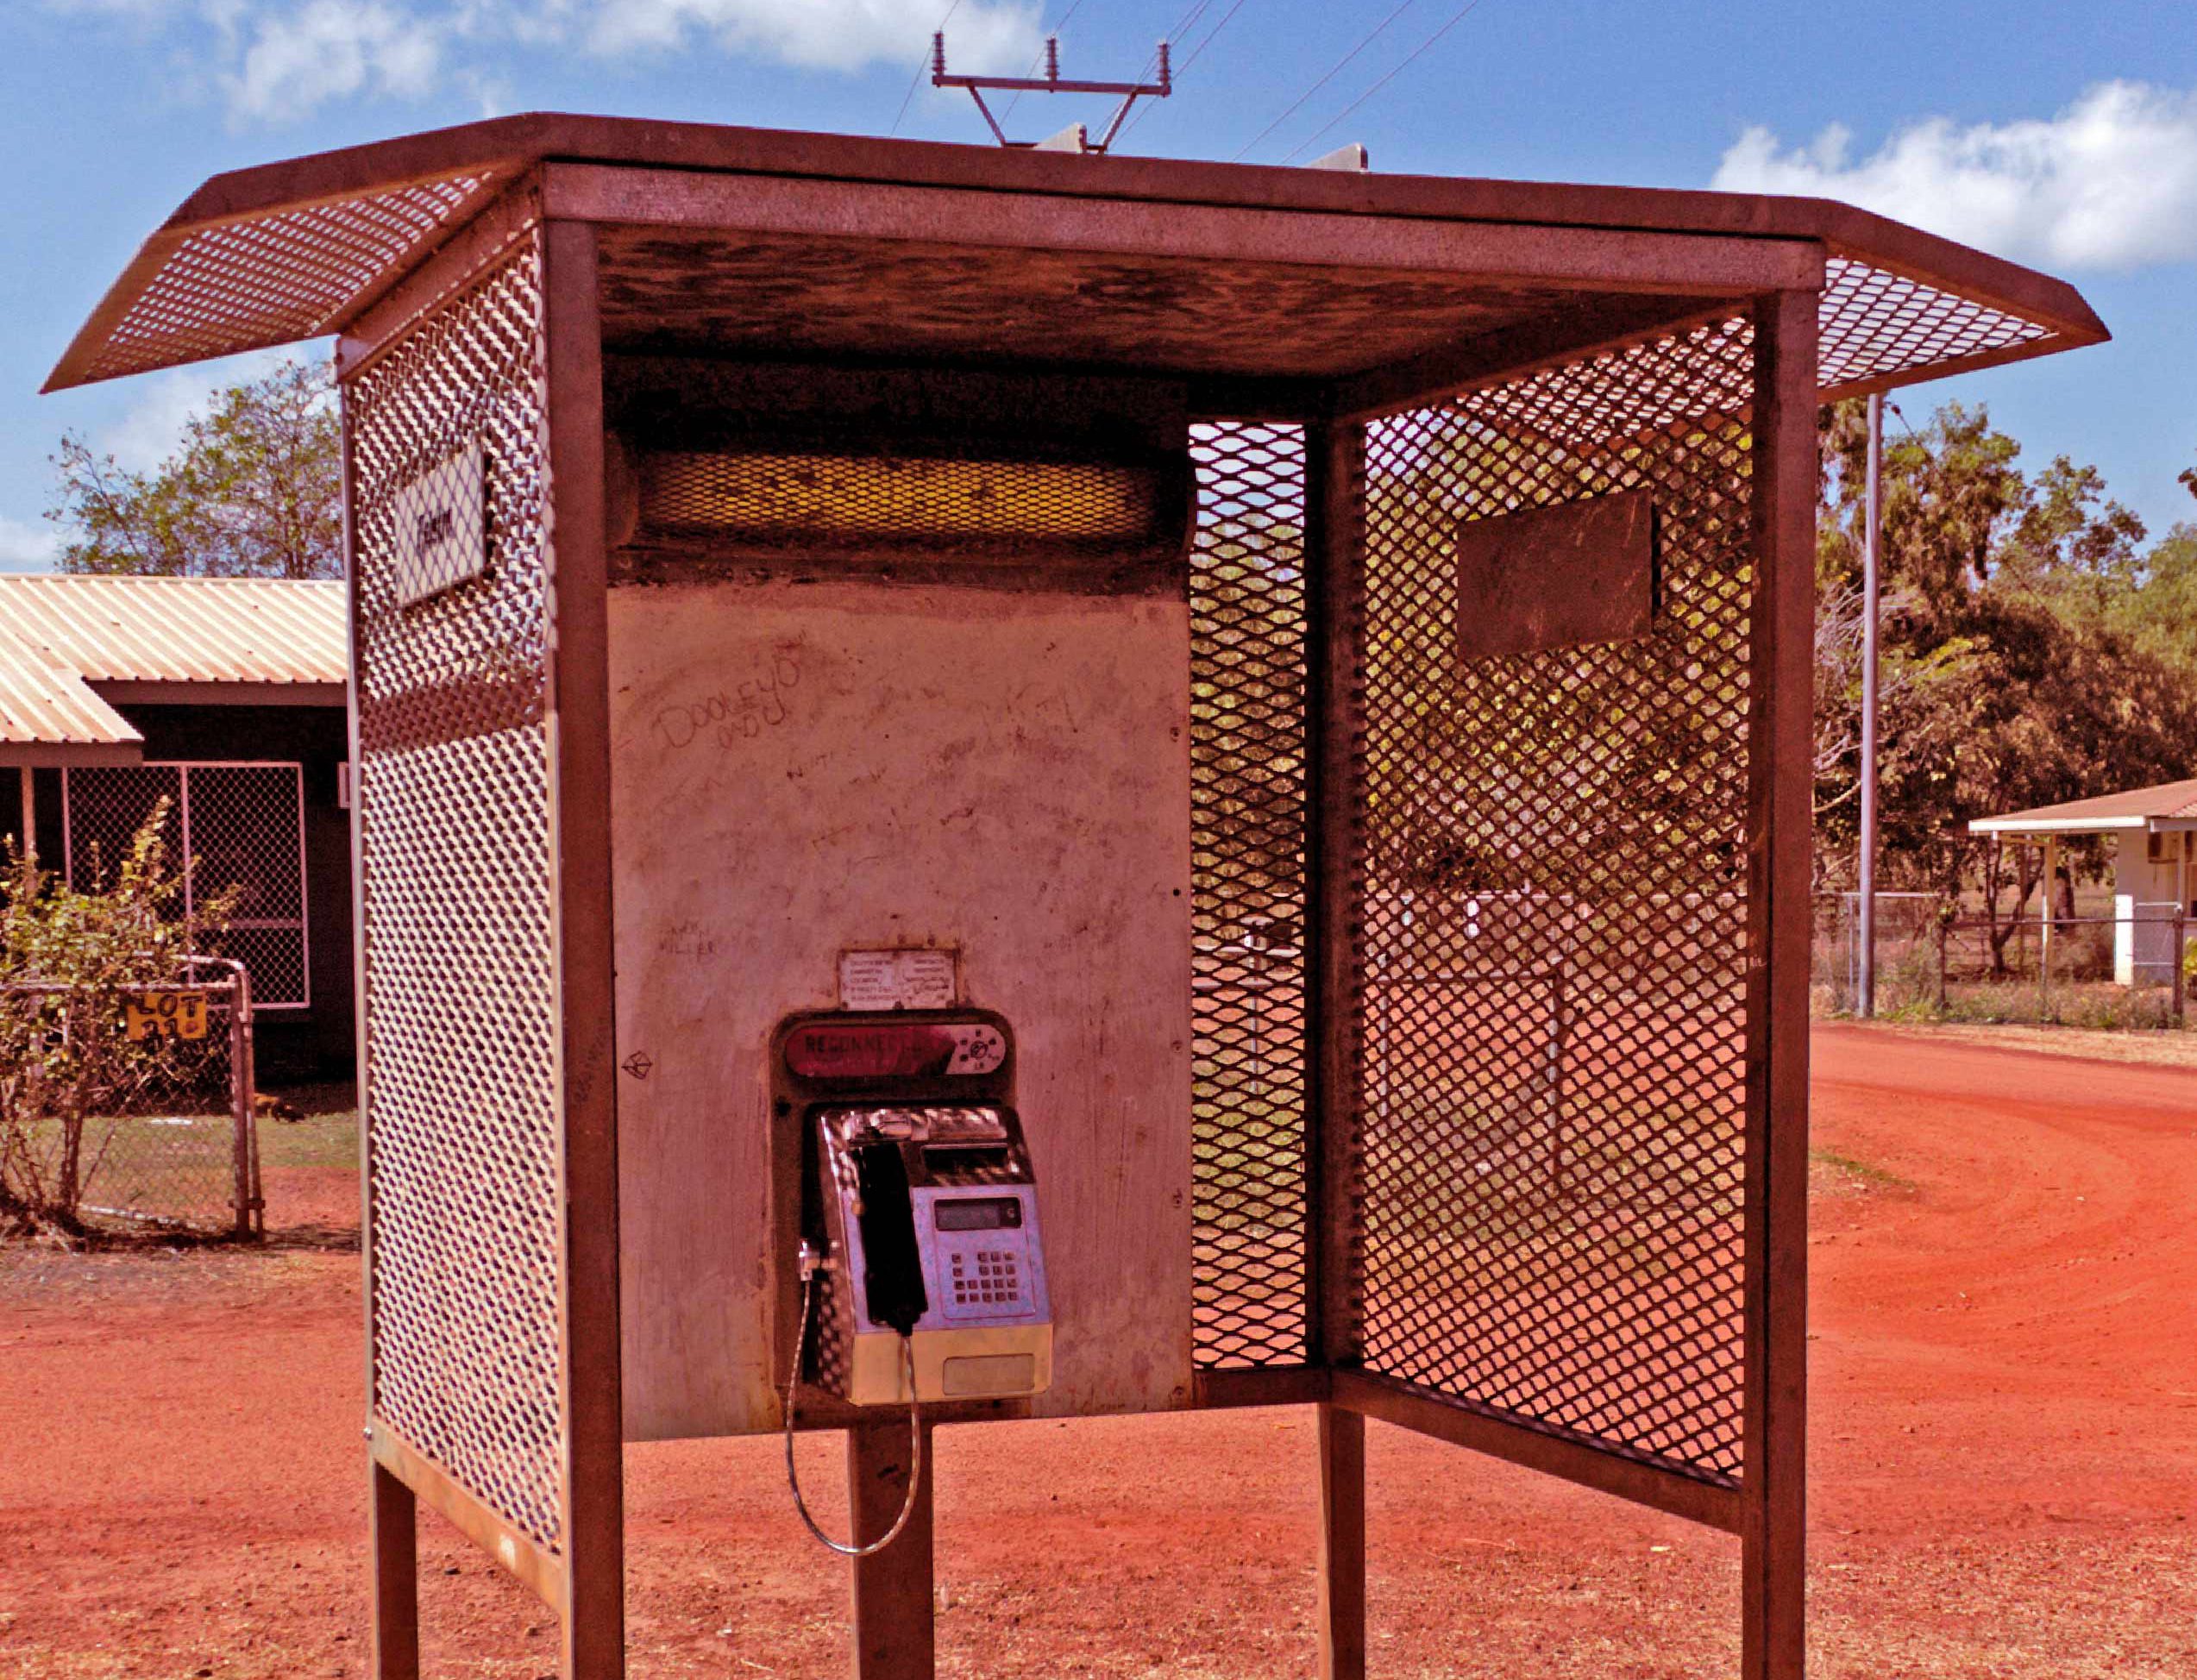 Phone booth in regional Australia